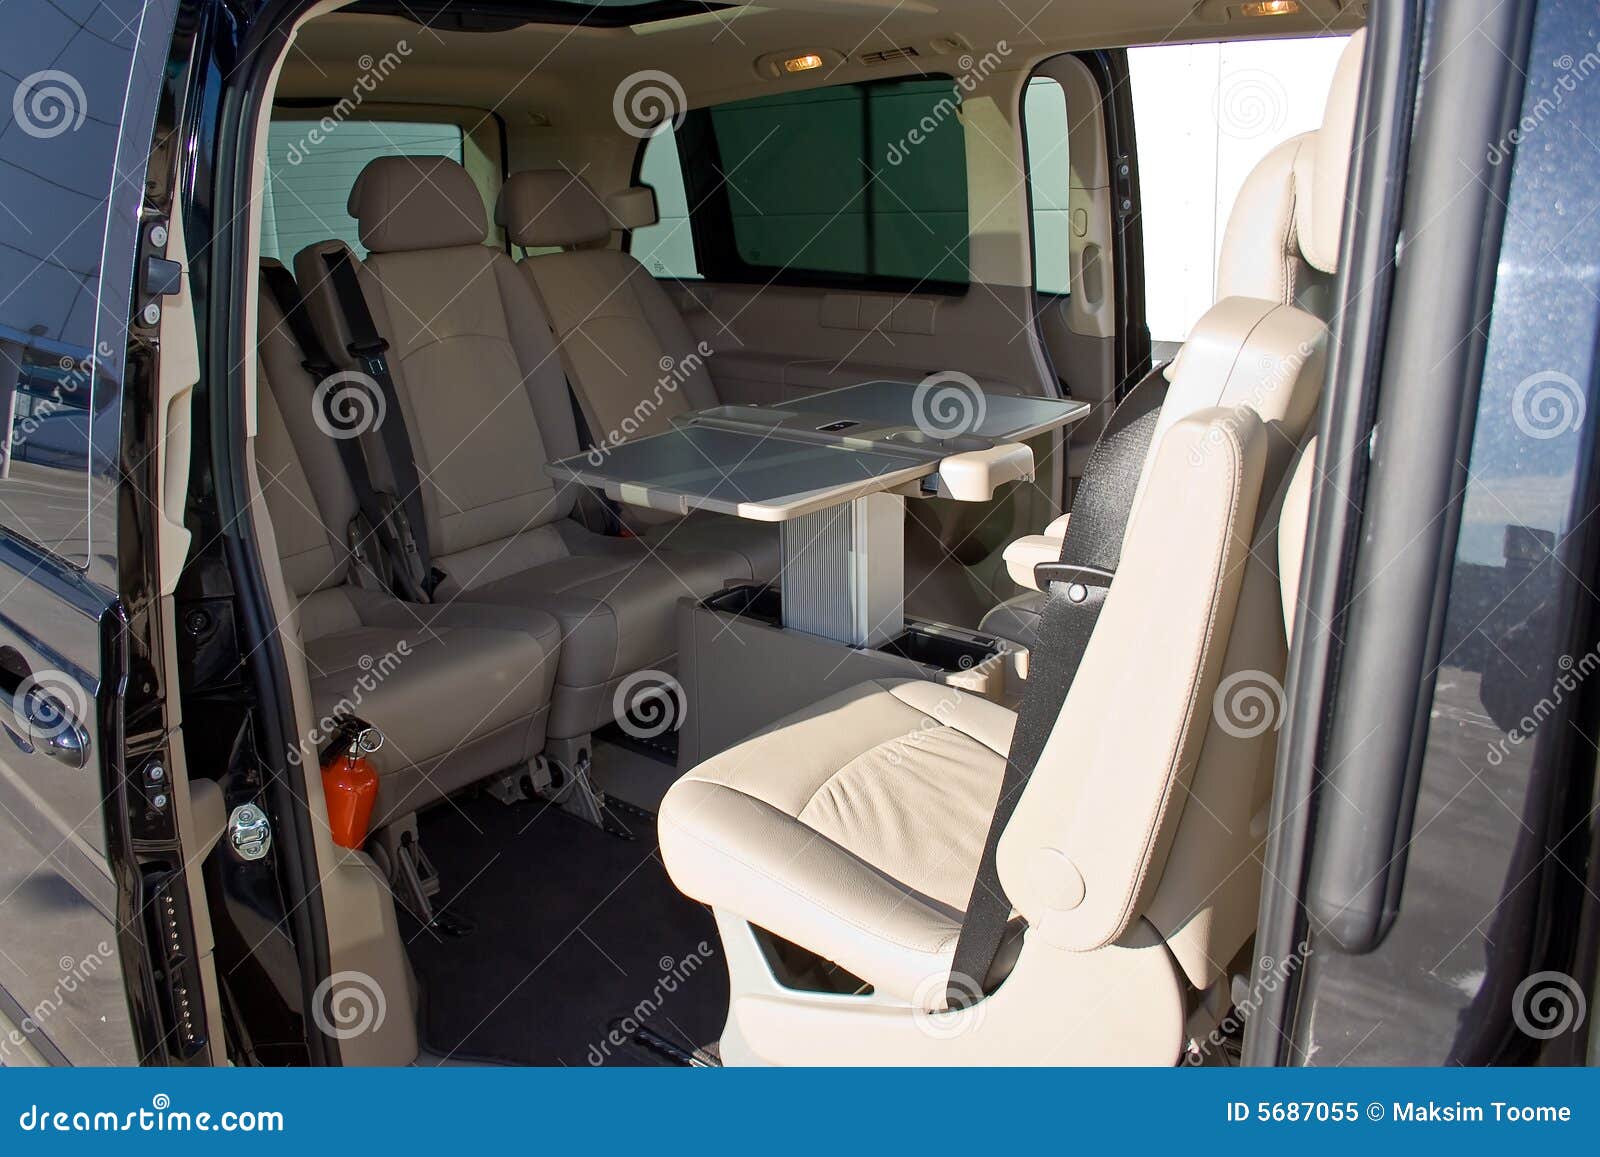 interior of a minivan